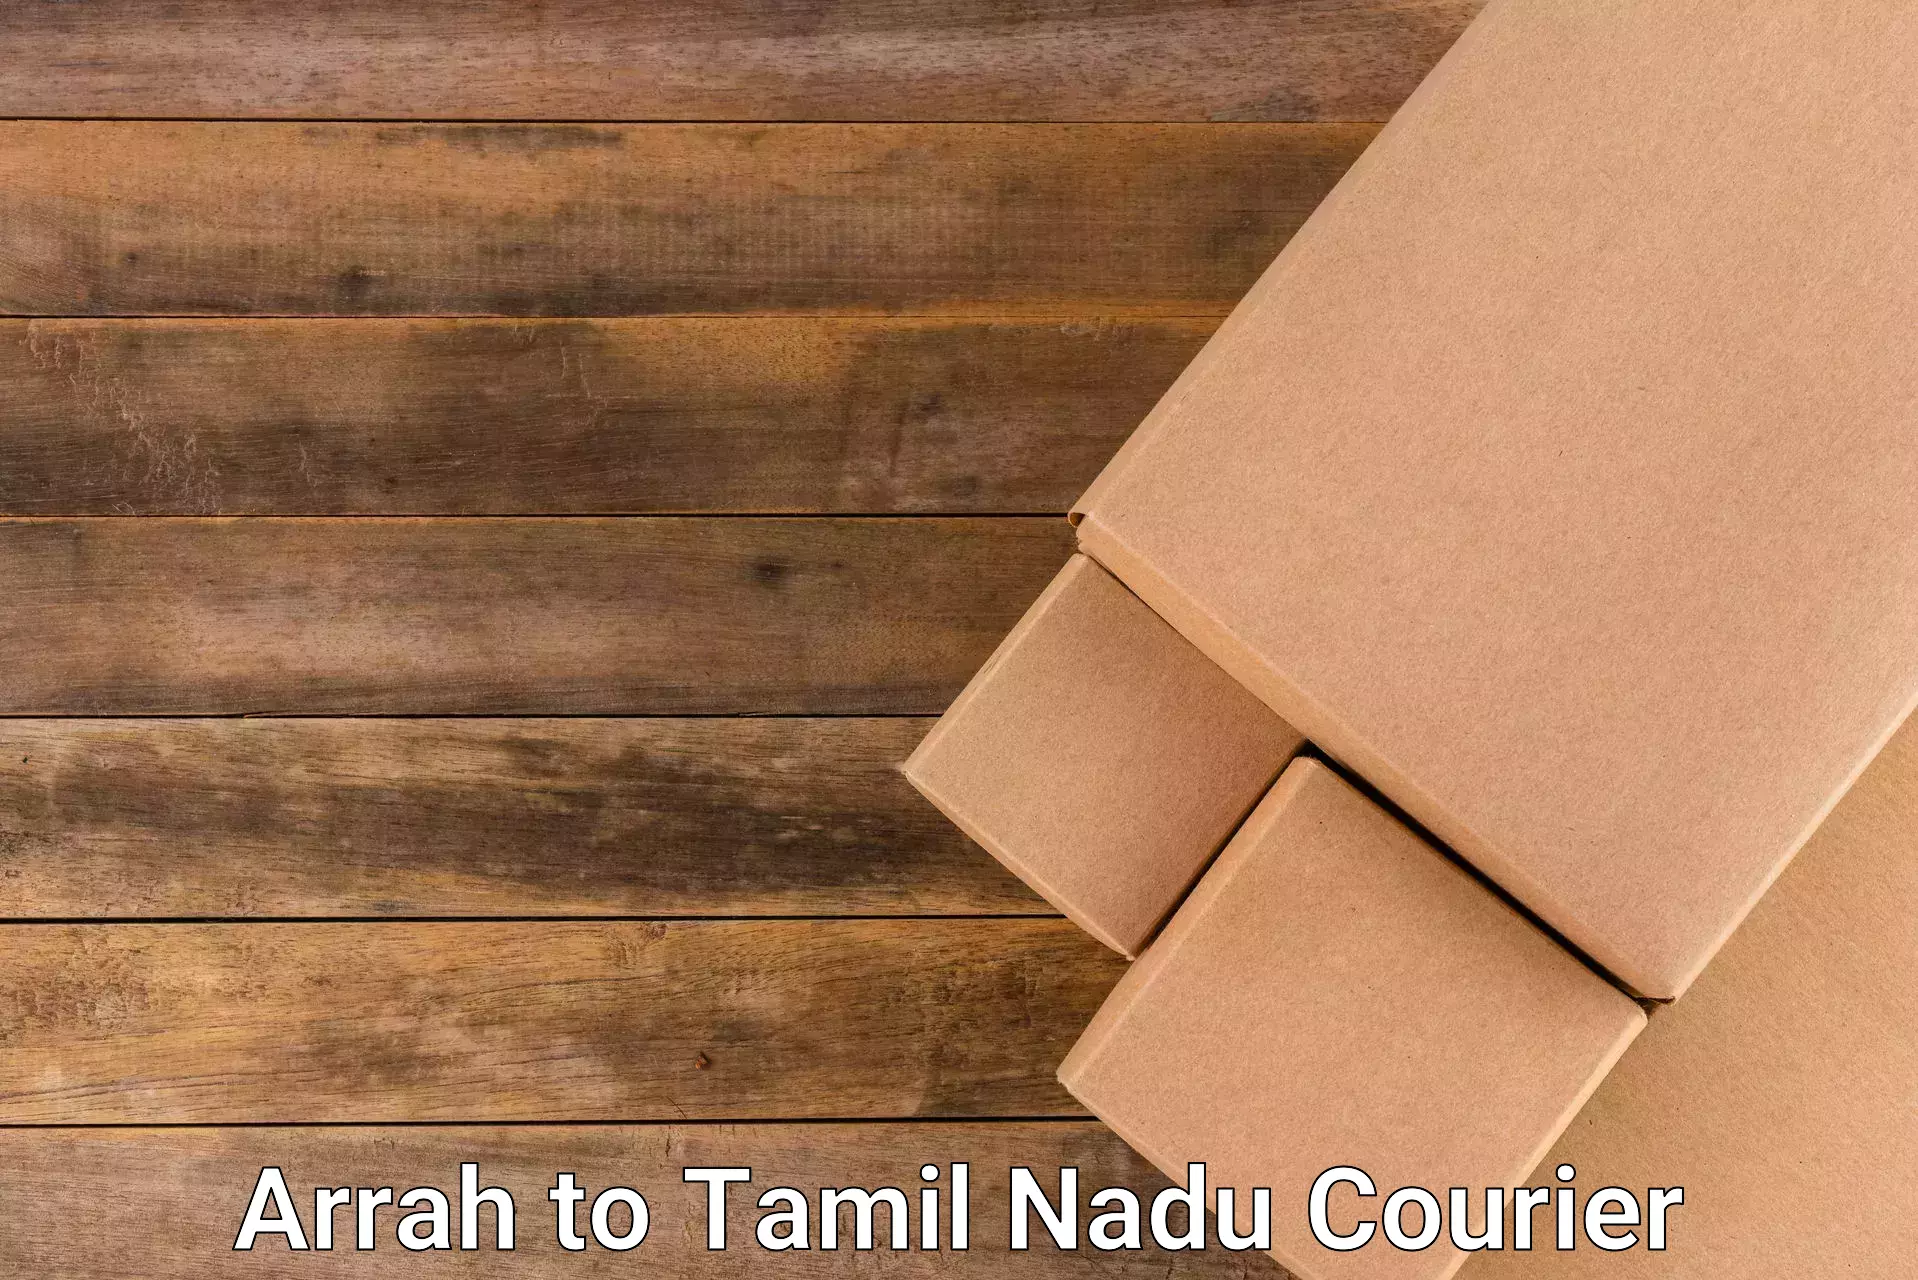 24-hour courier service Arrah to Gujiliamparai